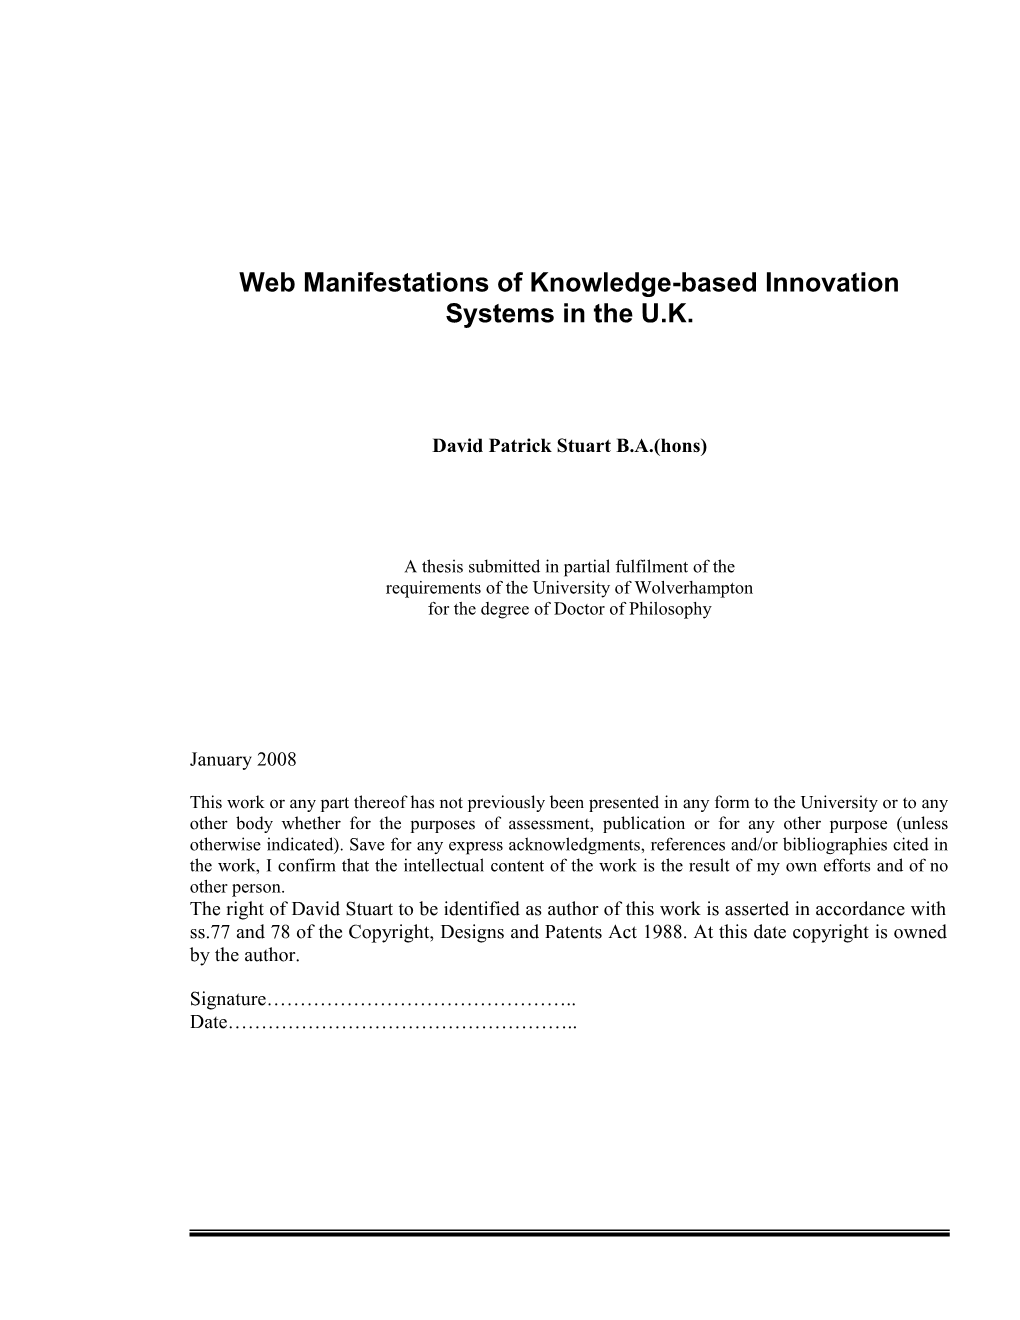 Web Manifestations of Knowledge-Based Innovation Systens Ub Tge U.K